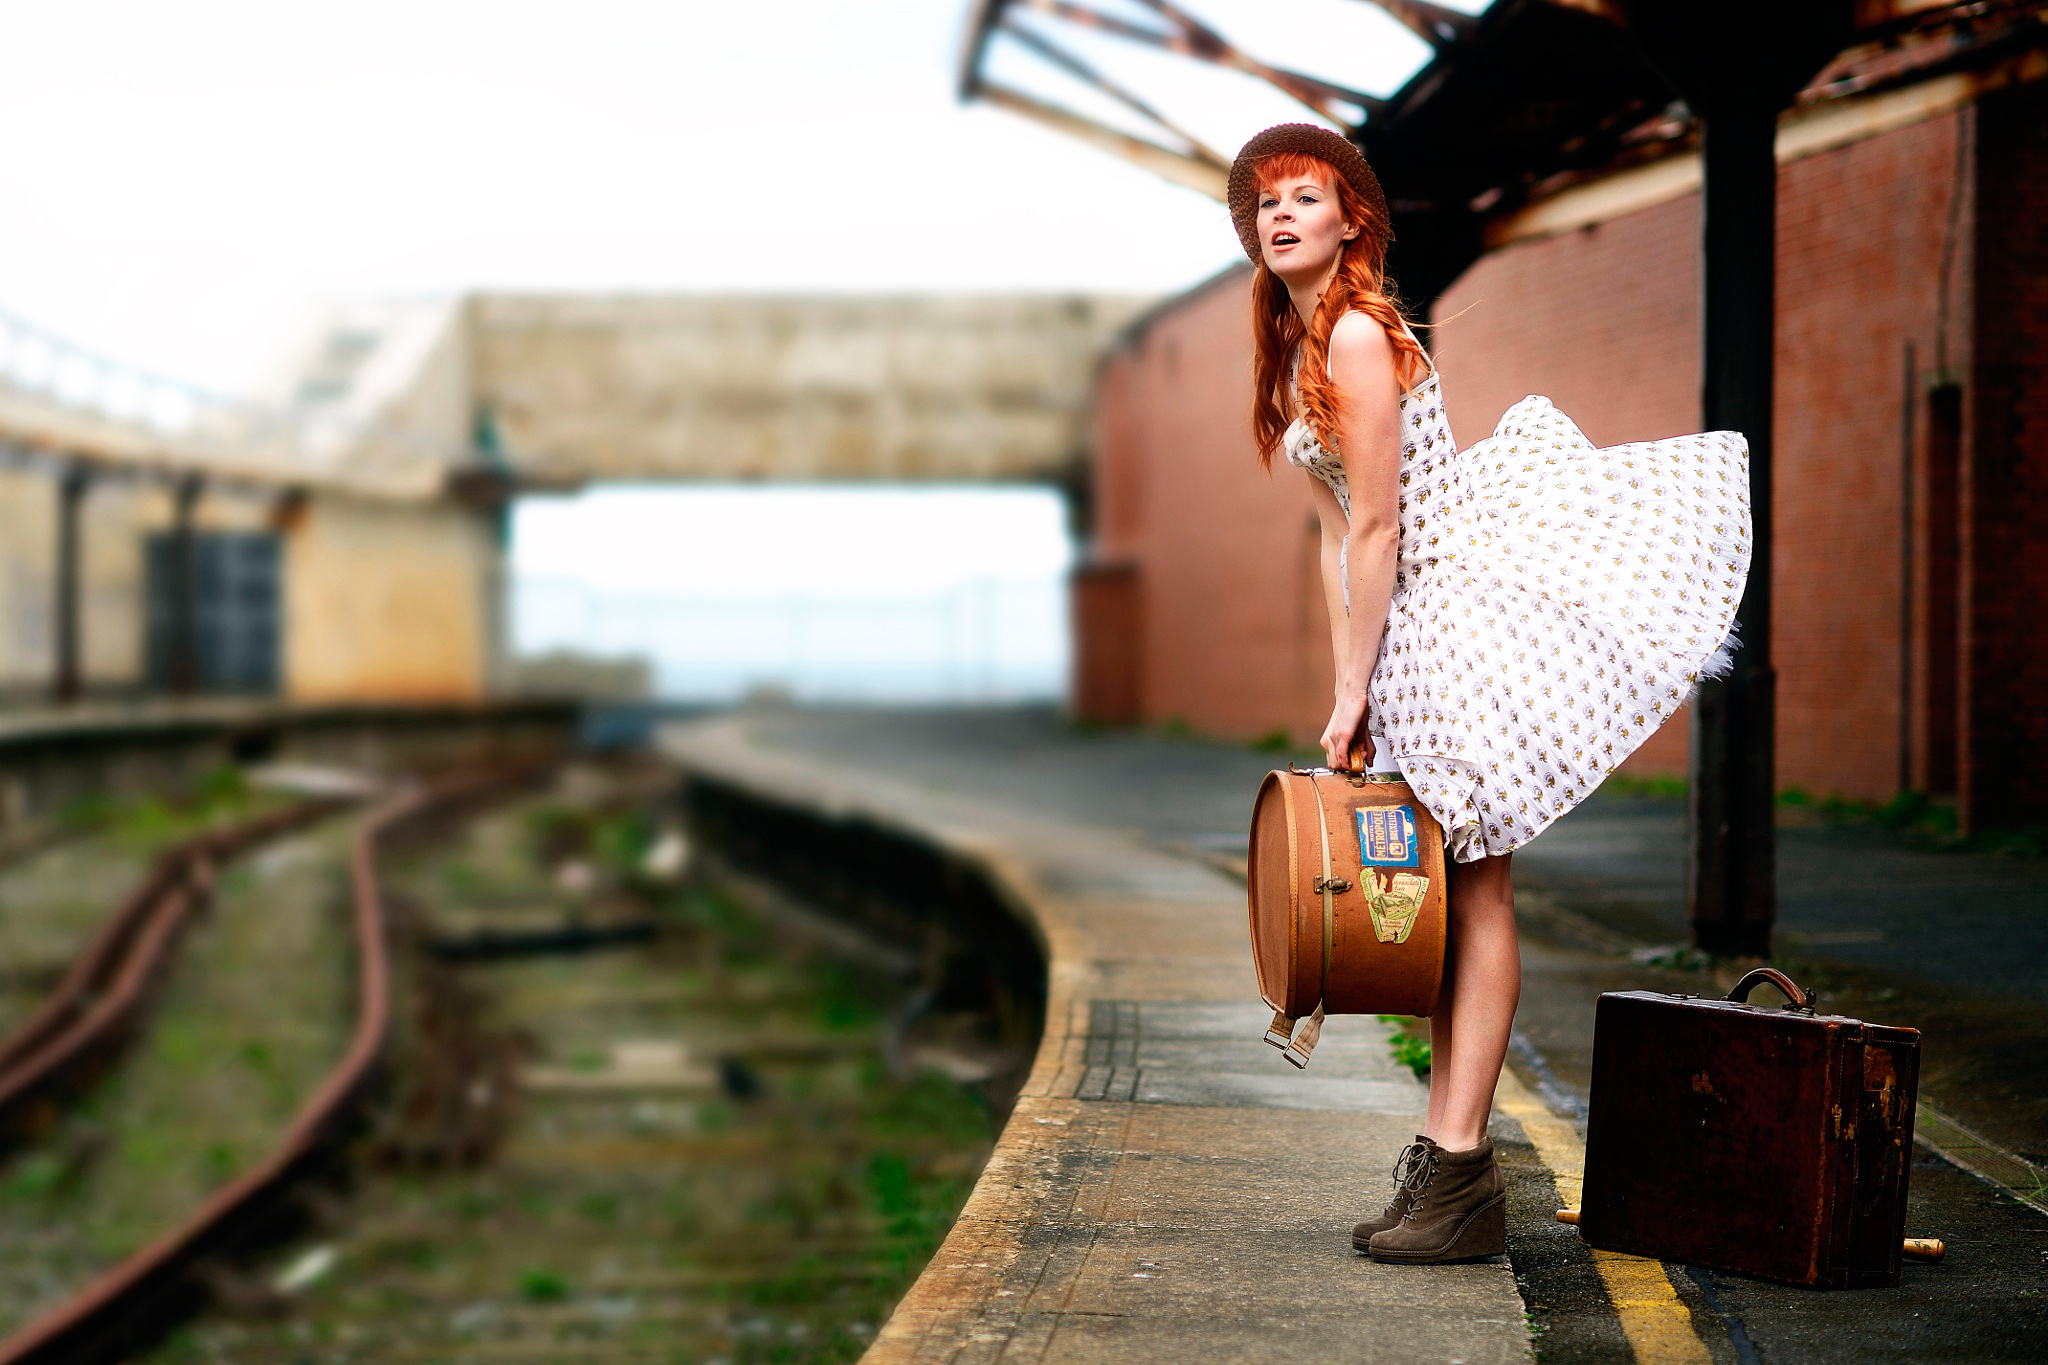 Женщина инди. Девушка с чемоданом. Девушка на вокзале с чемоданом. Фотосессия с чемоданом. Чем девушка.